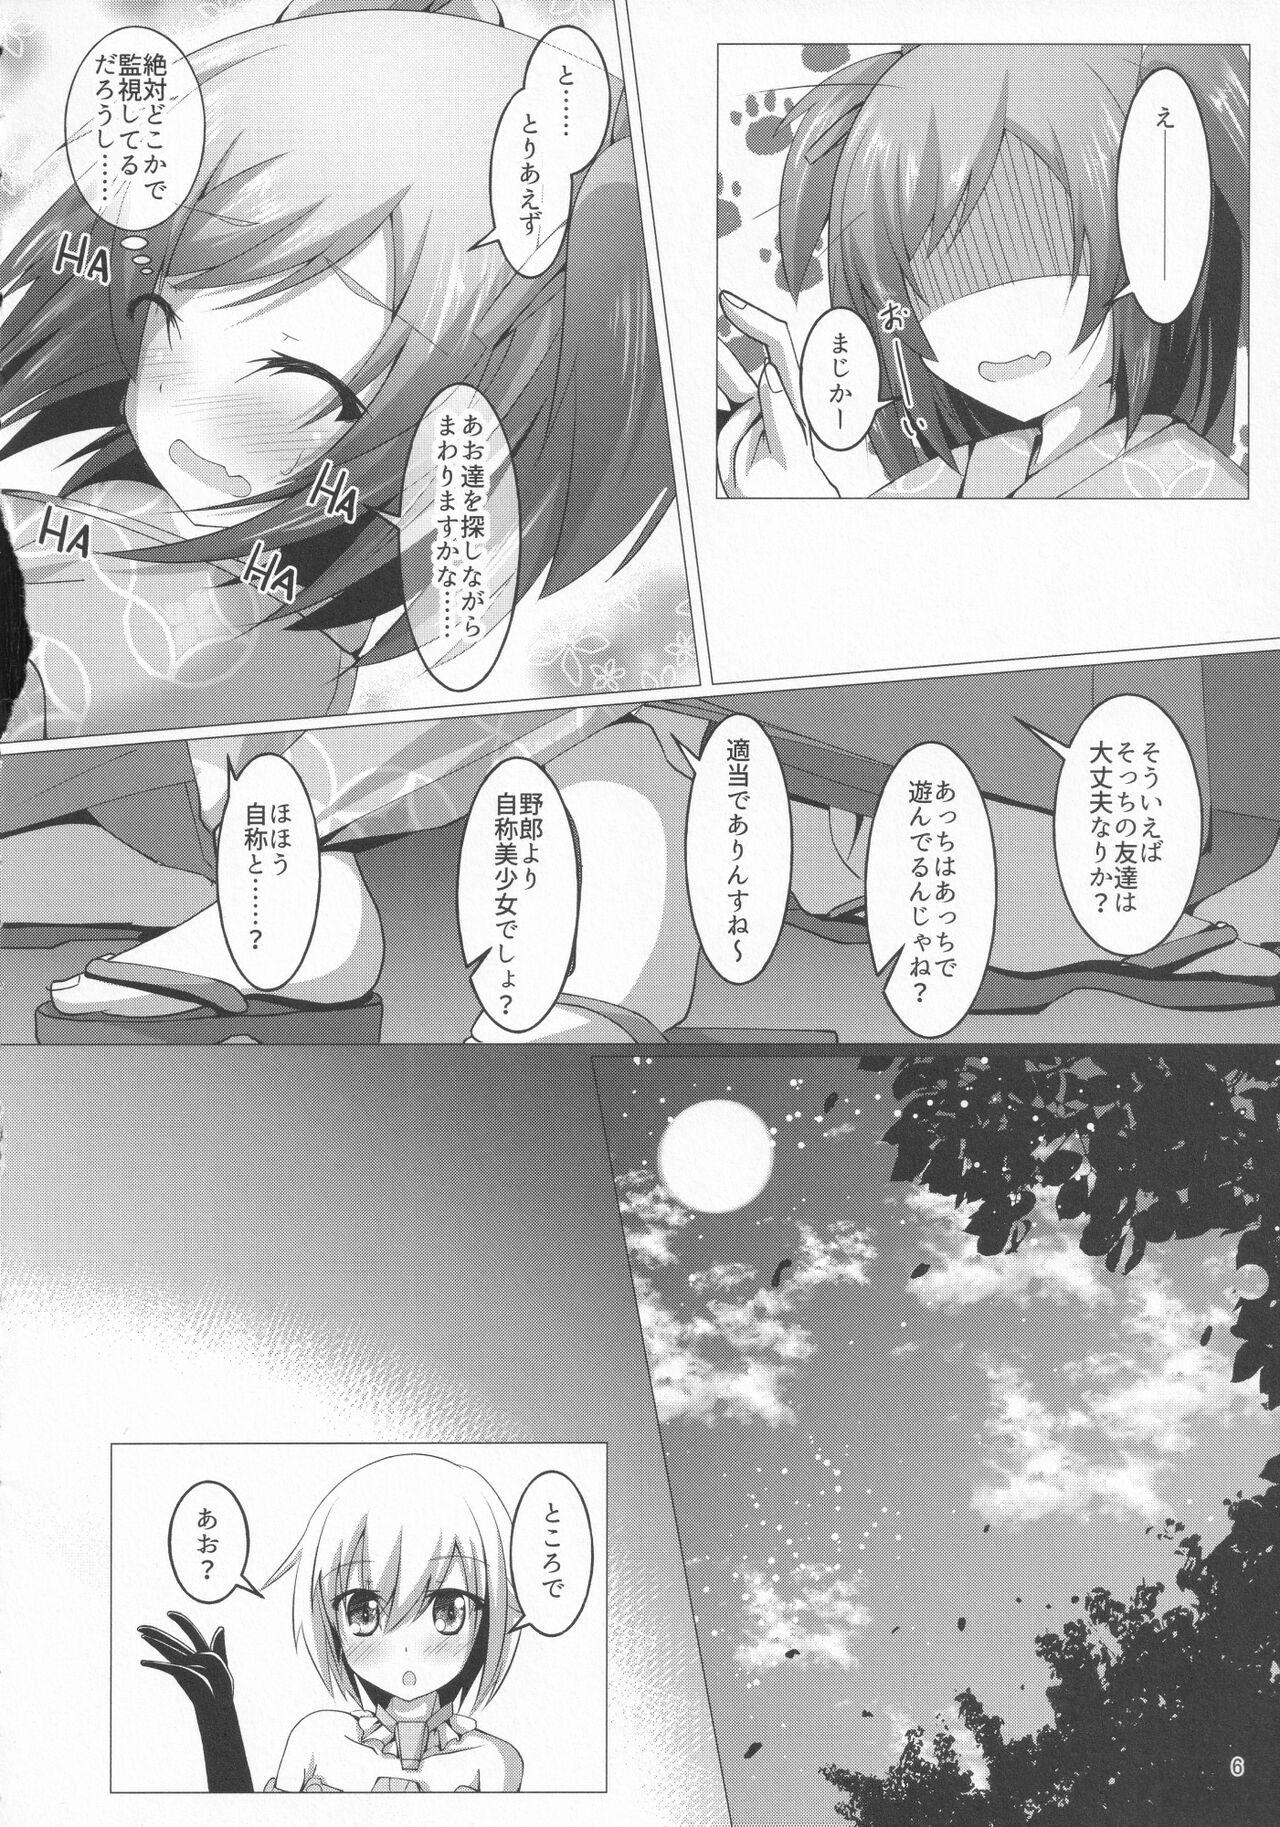 4some Bukiko ga Kokuhaku Sareta Ken 4 - Frame arms girl Asian Babes - Page 5